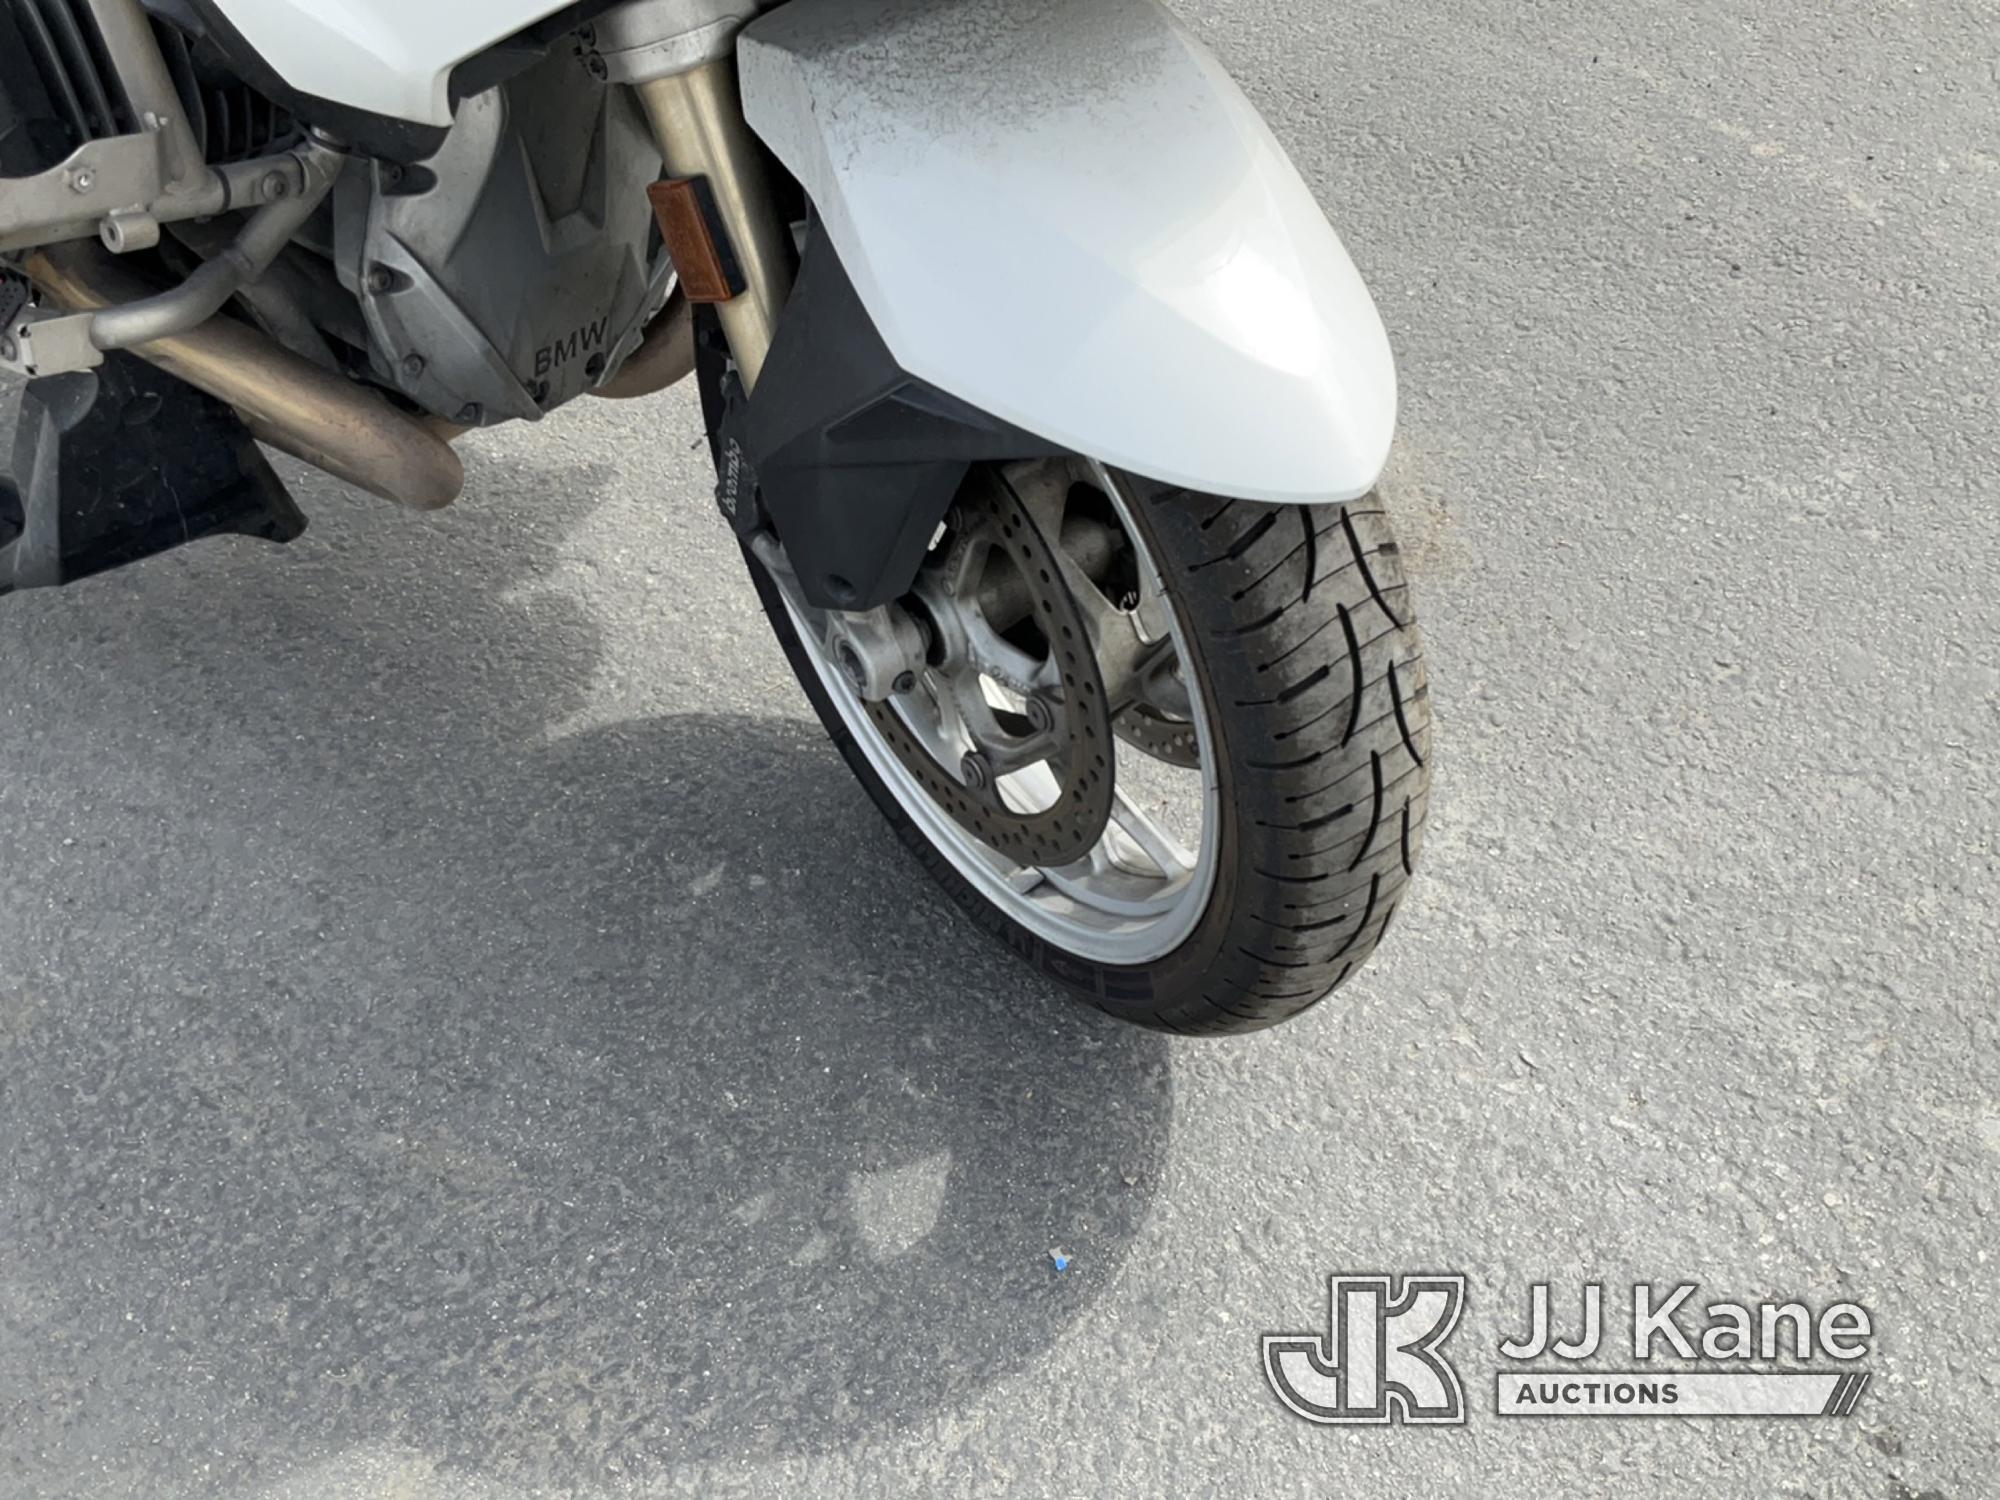 (Jurupa Valley, CA) 2016 BMW R1200RT Motorcycle Runs & Moves, Warning Lights Are on , Missing Parts